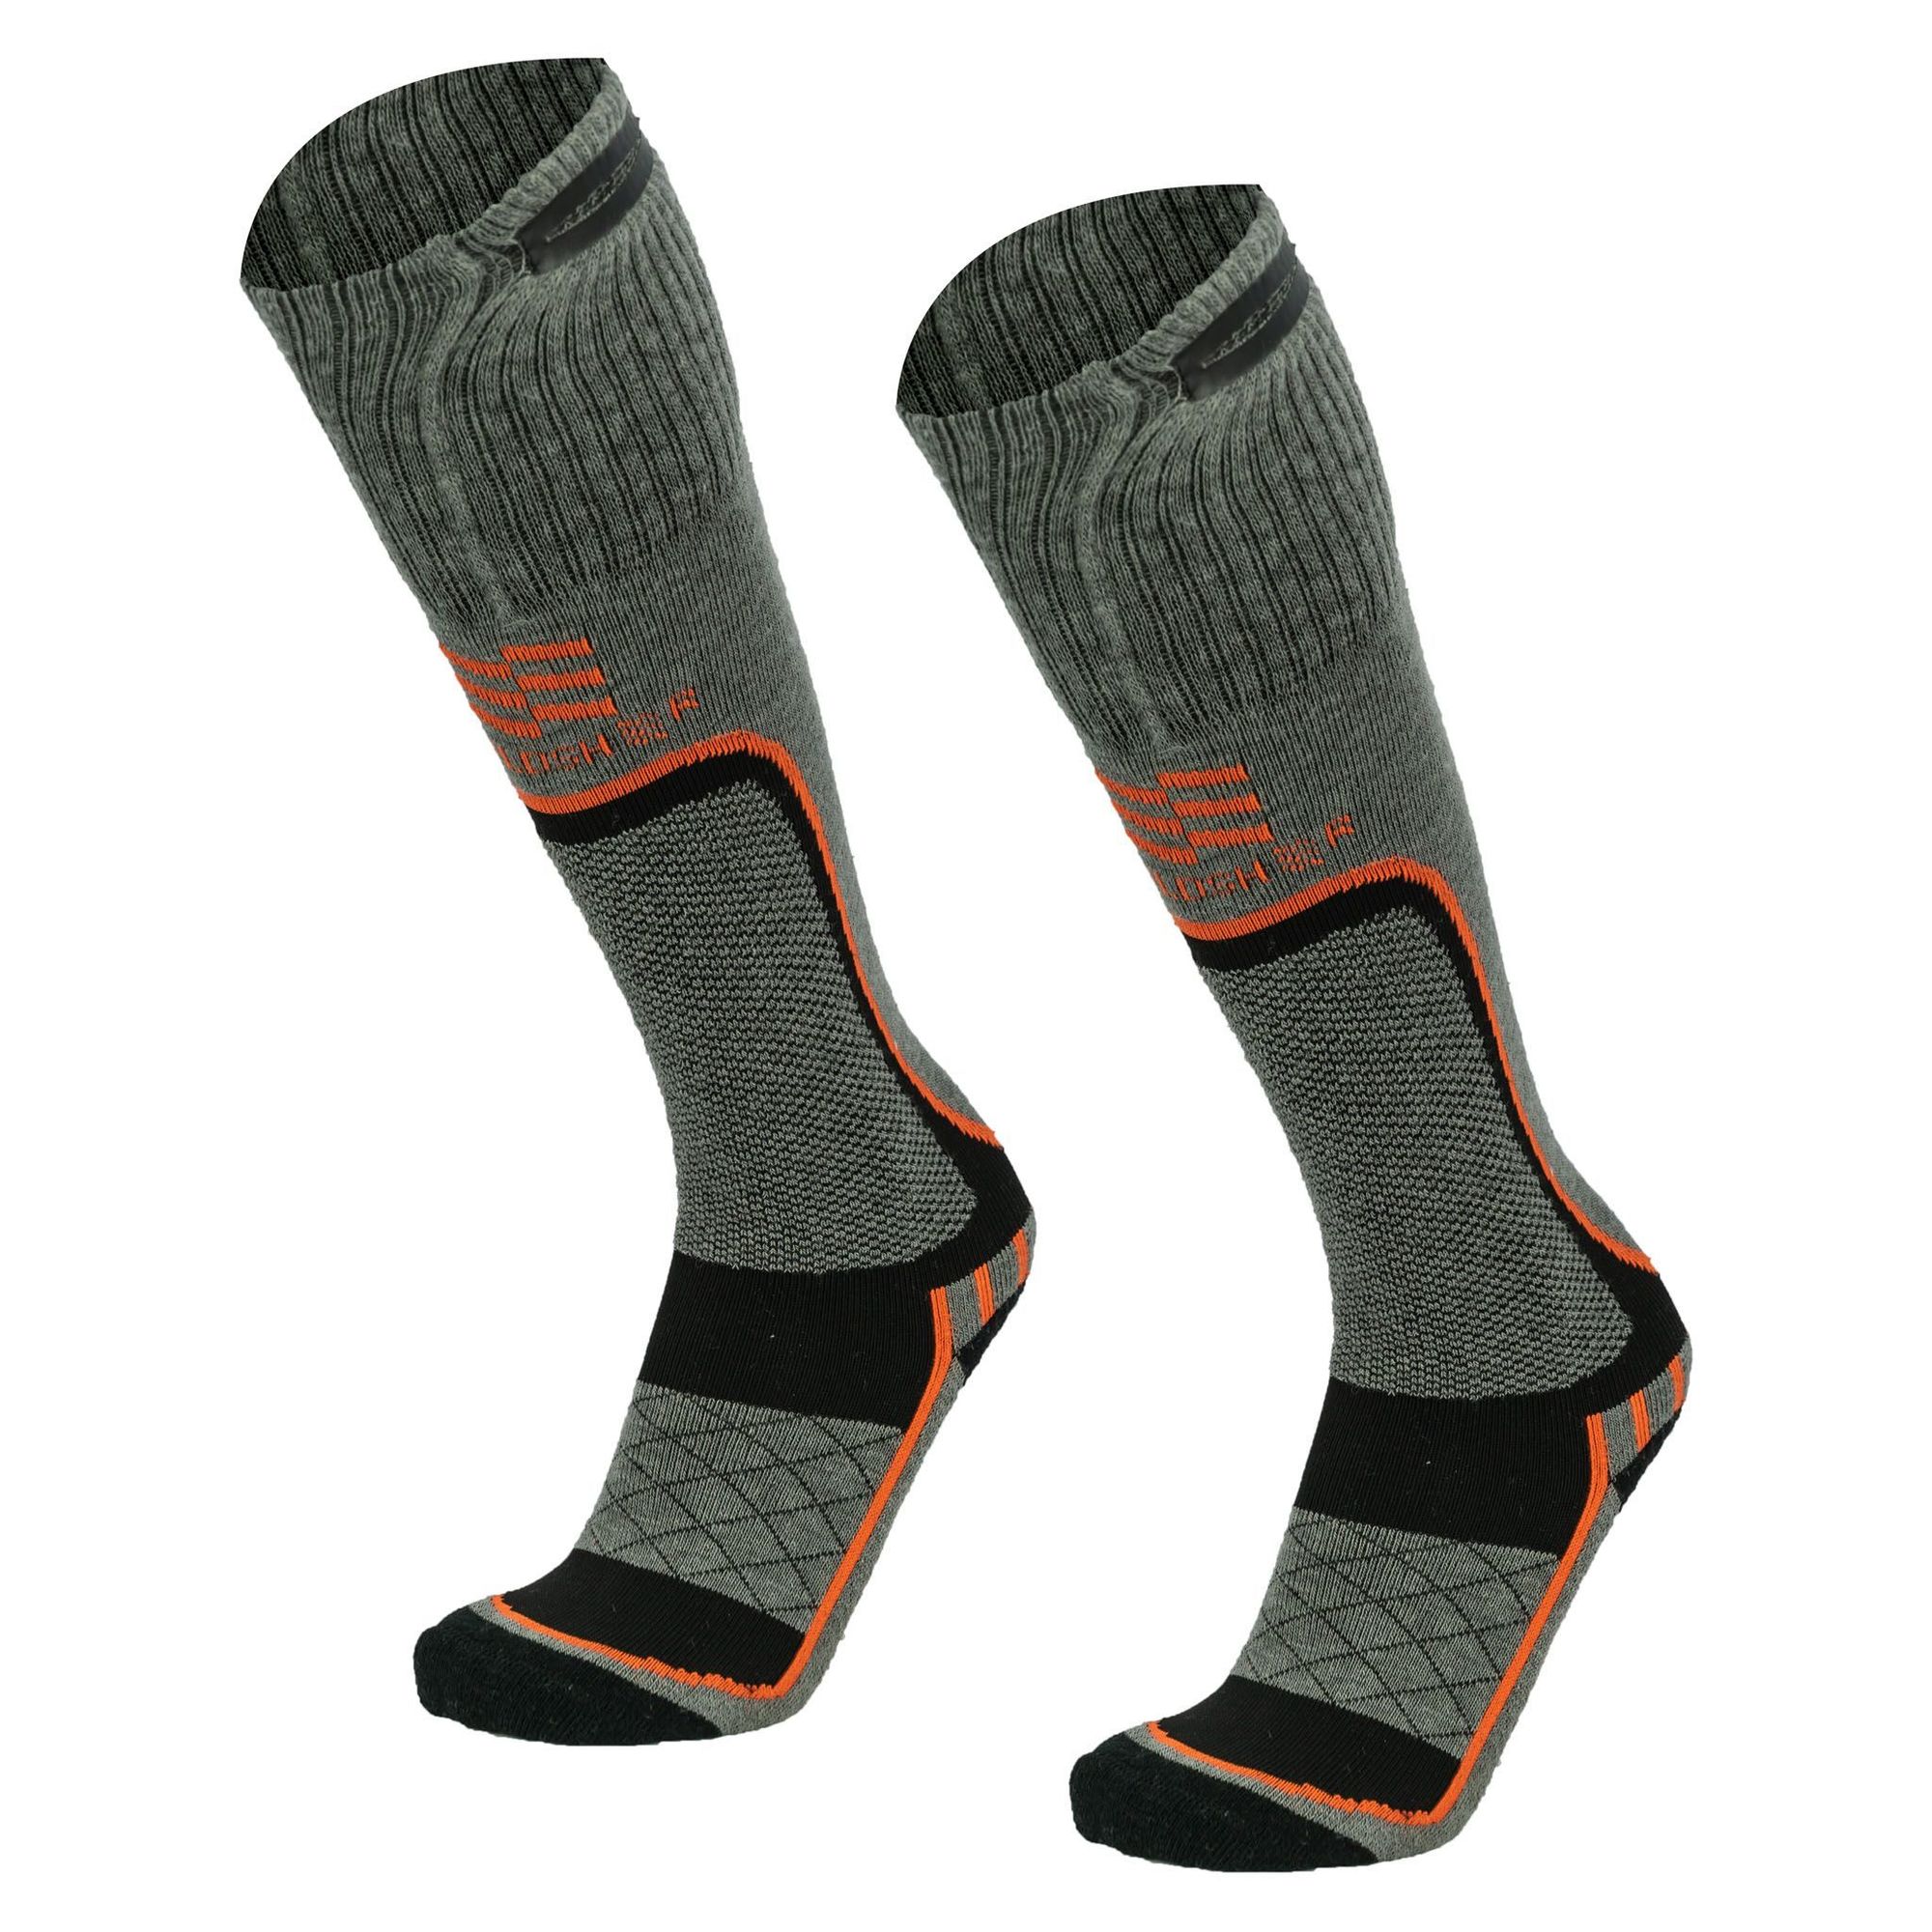 Fieldsheer, Premium Merino Heated Socks | Men's | BLK | MD, Size M, Pairs (qty.) 1 Color Black, Model MWMS07010321